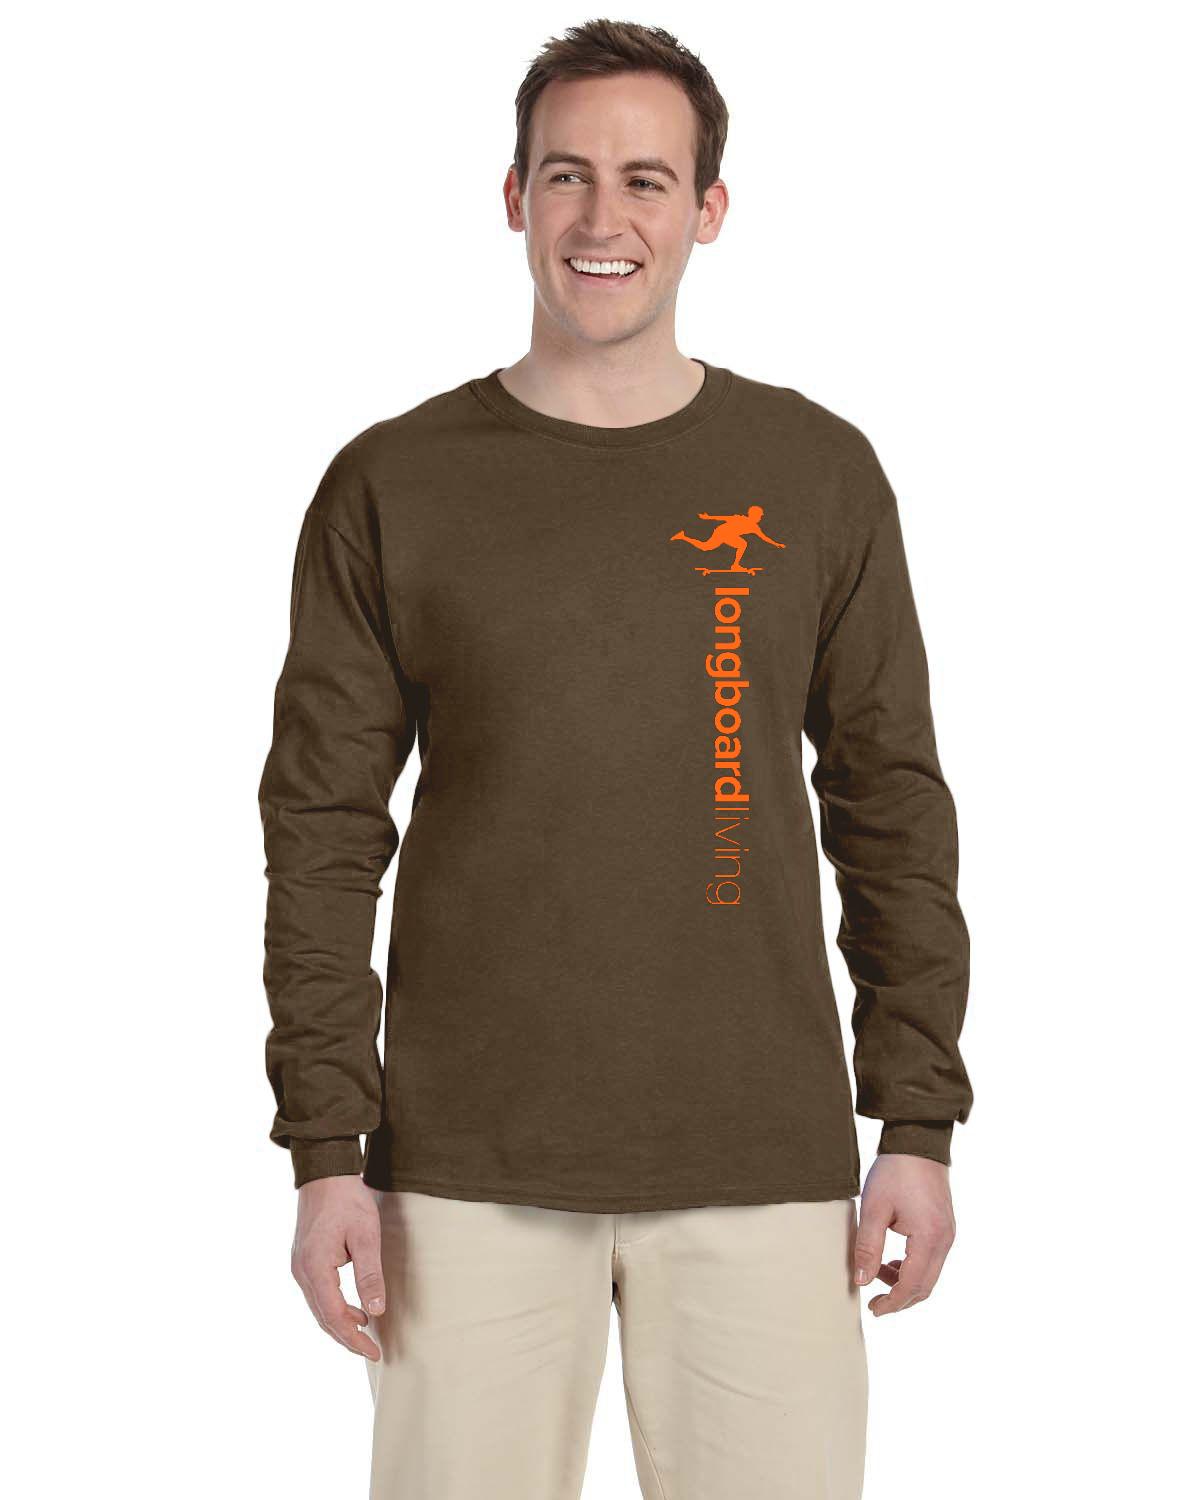 Longboard Living - Long Sleeve Vertical Print Shirt